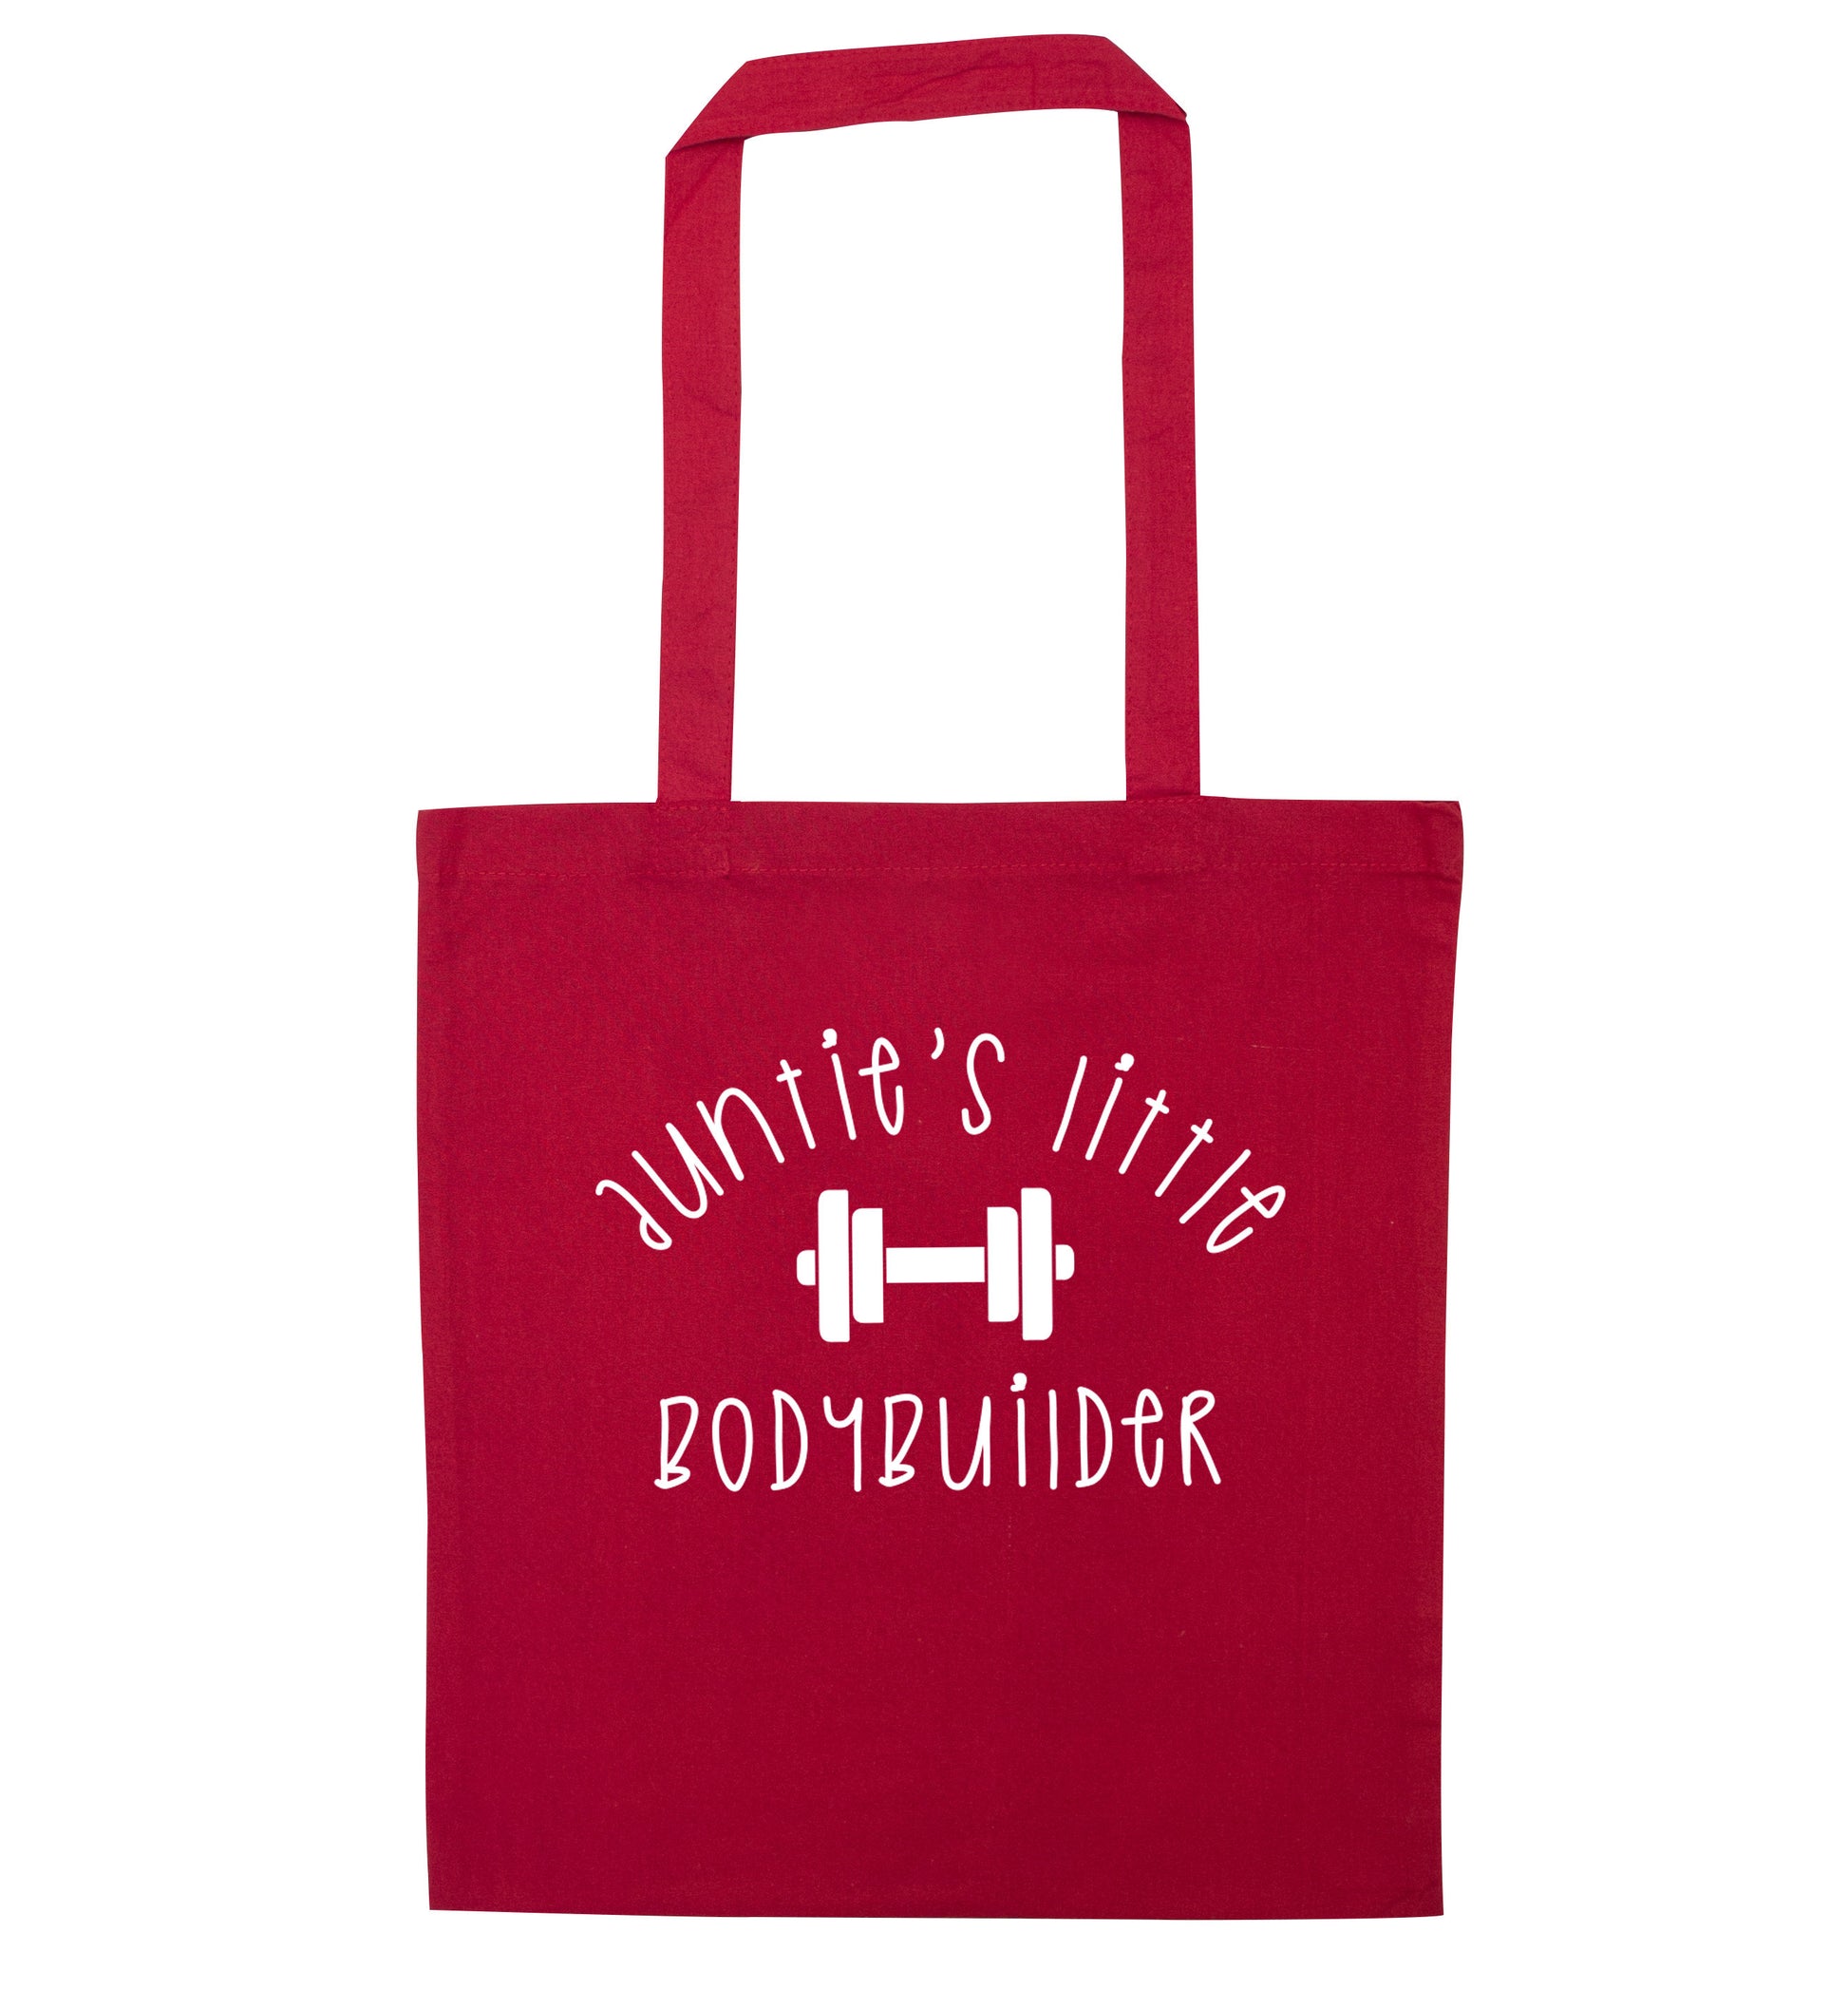 Auntie's little bodybuilder red tote bag